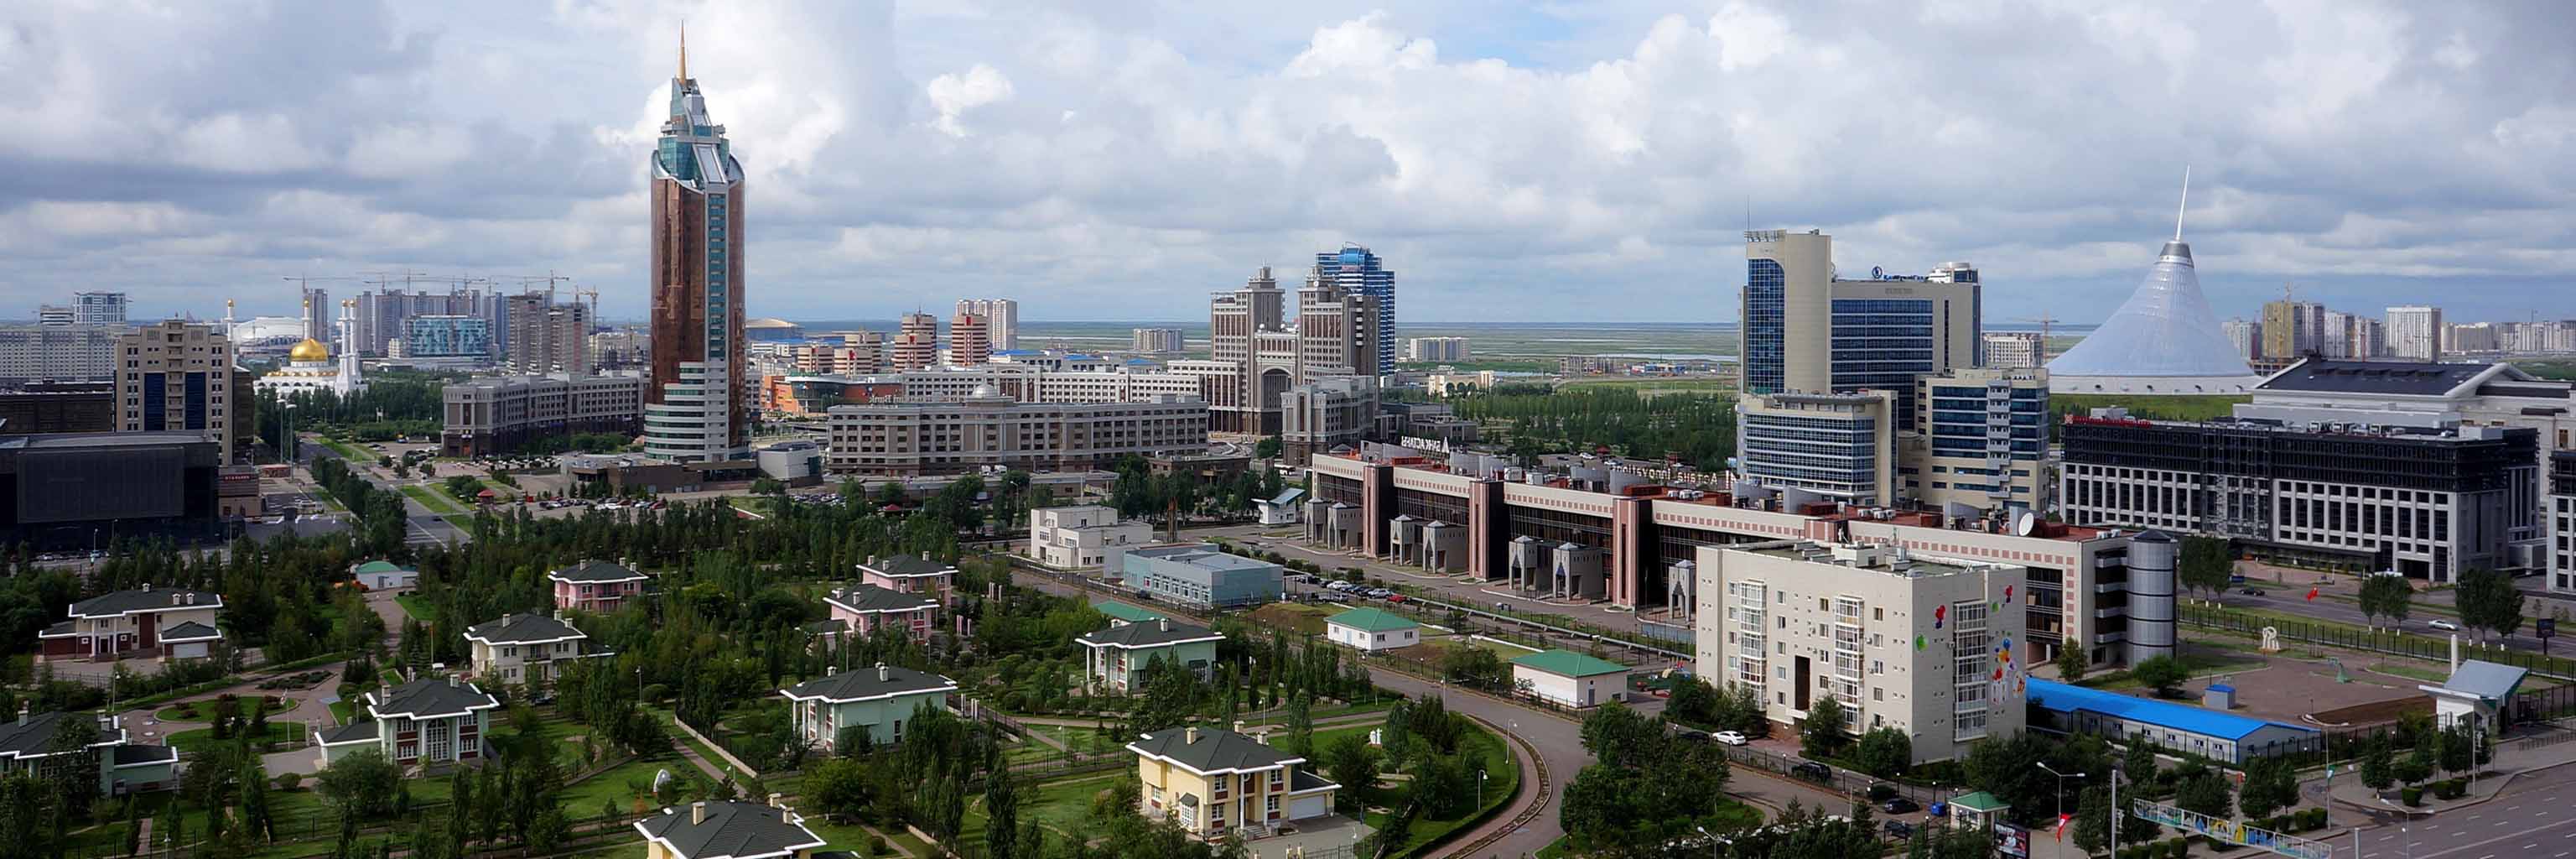 Downtown Astana, Kazakhstan